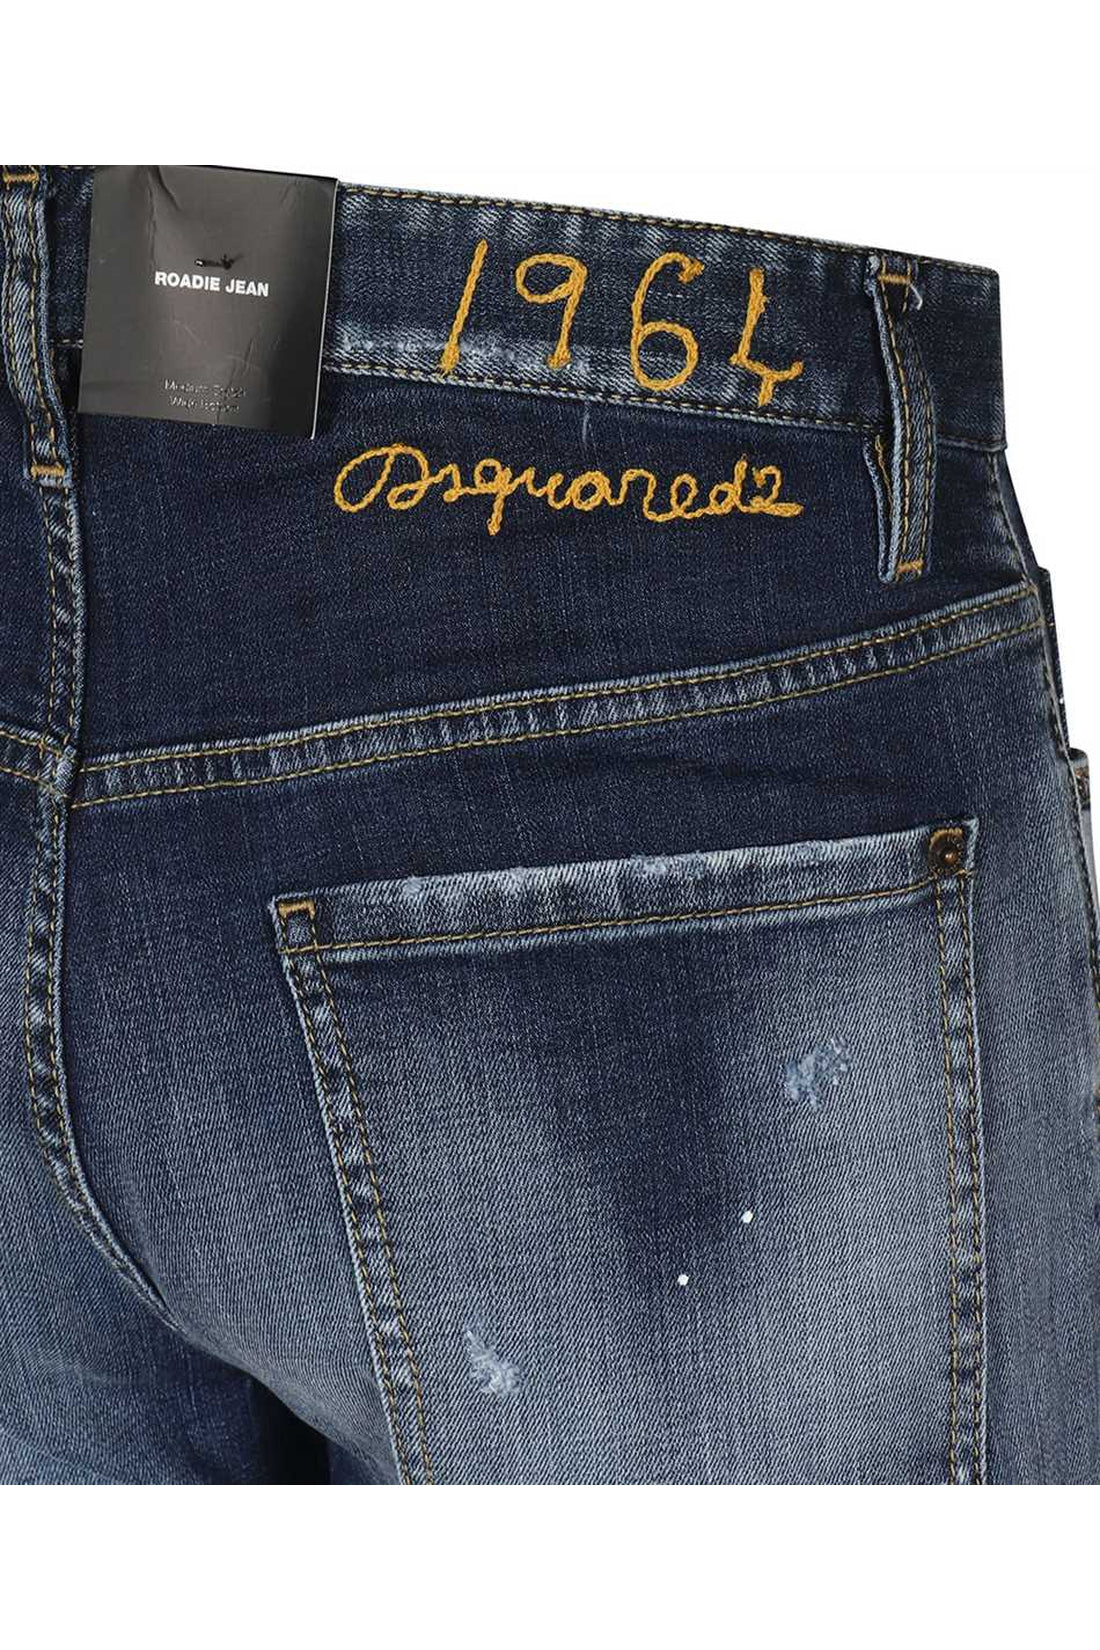 Dsquared2-OUTLET-SALE-Roadie 5-pocket jeans-ARCHIVIST